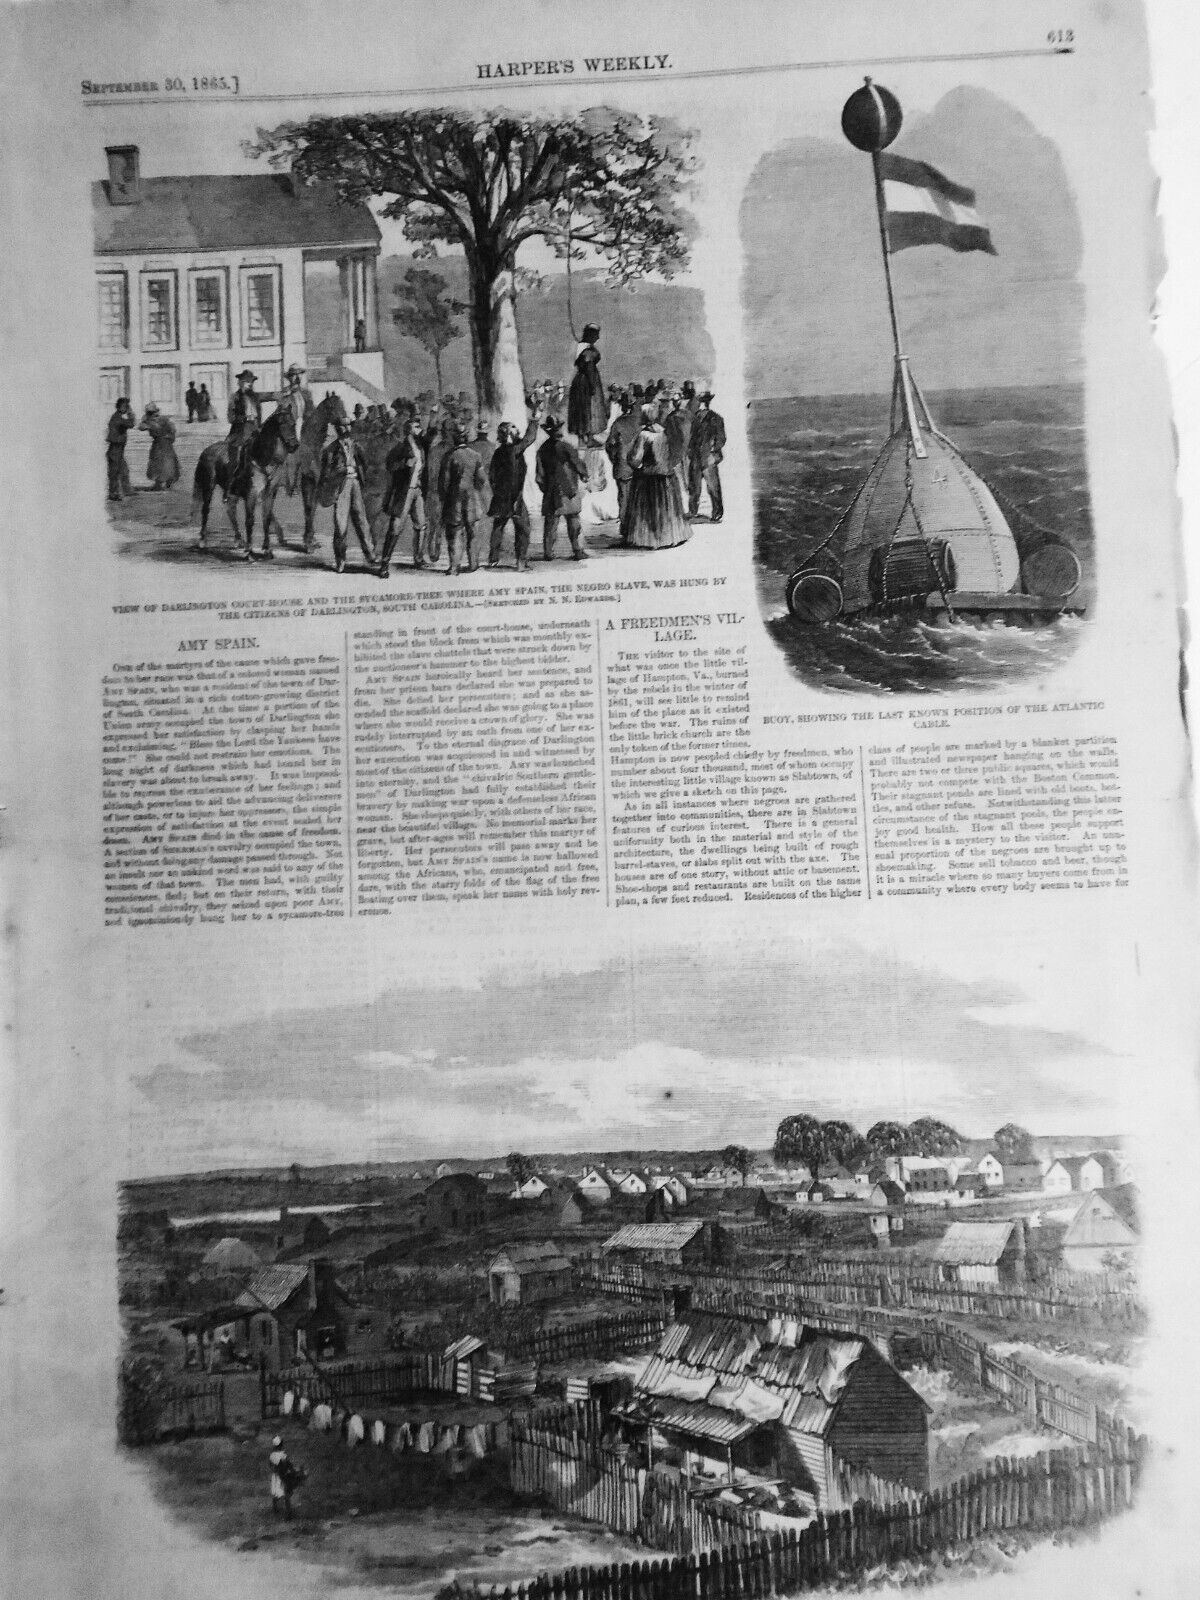 1865 The Freedmen's Village, Hampton VA + Hanging of negro slave Amy Spain